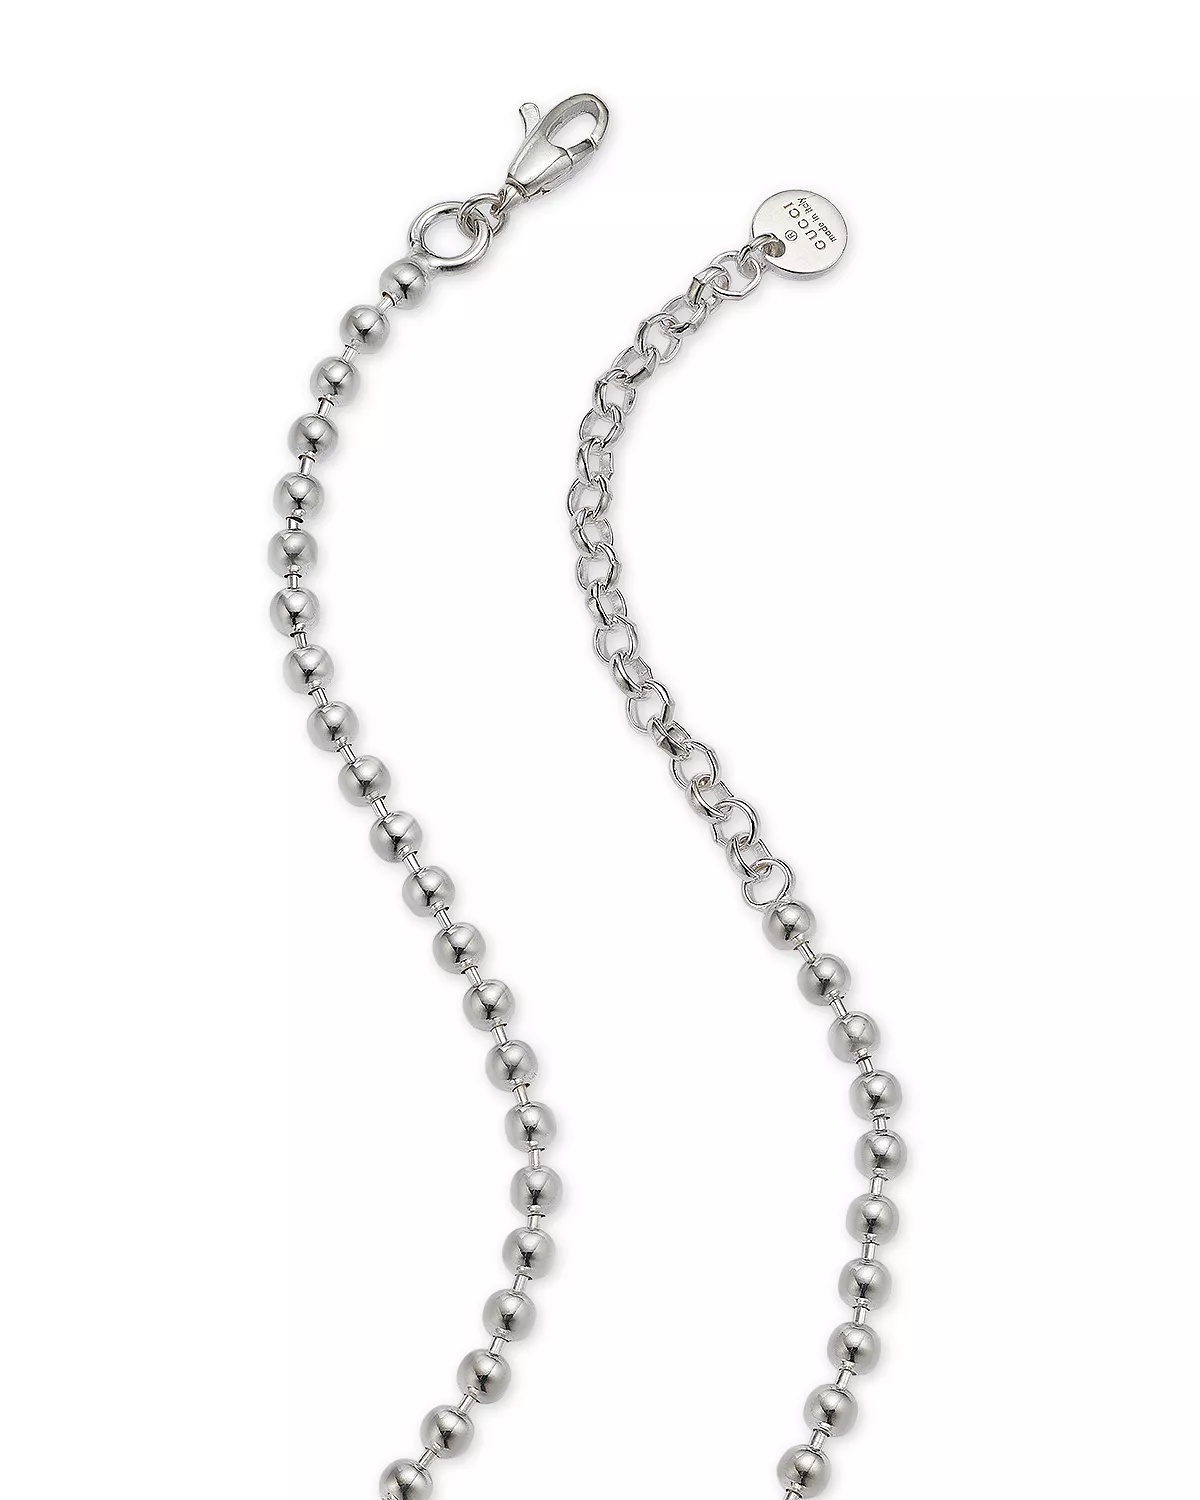 Sterling Silver Interlocking G Pendant Necklace, 15" - 4